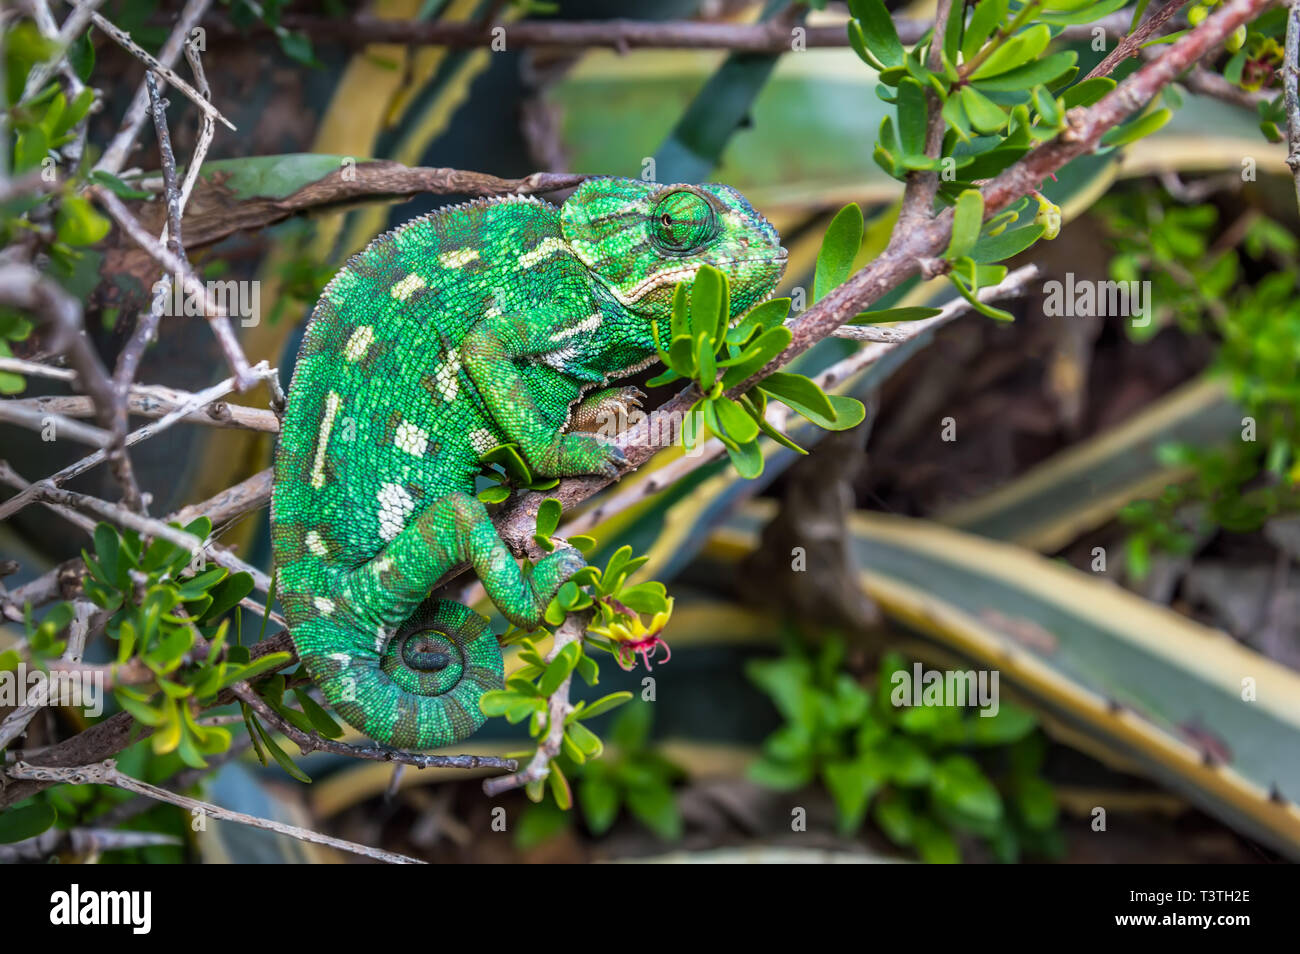 Wild green Mediterranean Chameleon or Common Chameleon - Chamaeleo chamaeleon - in bushes, Malta Stock Photo